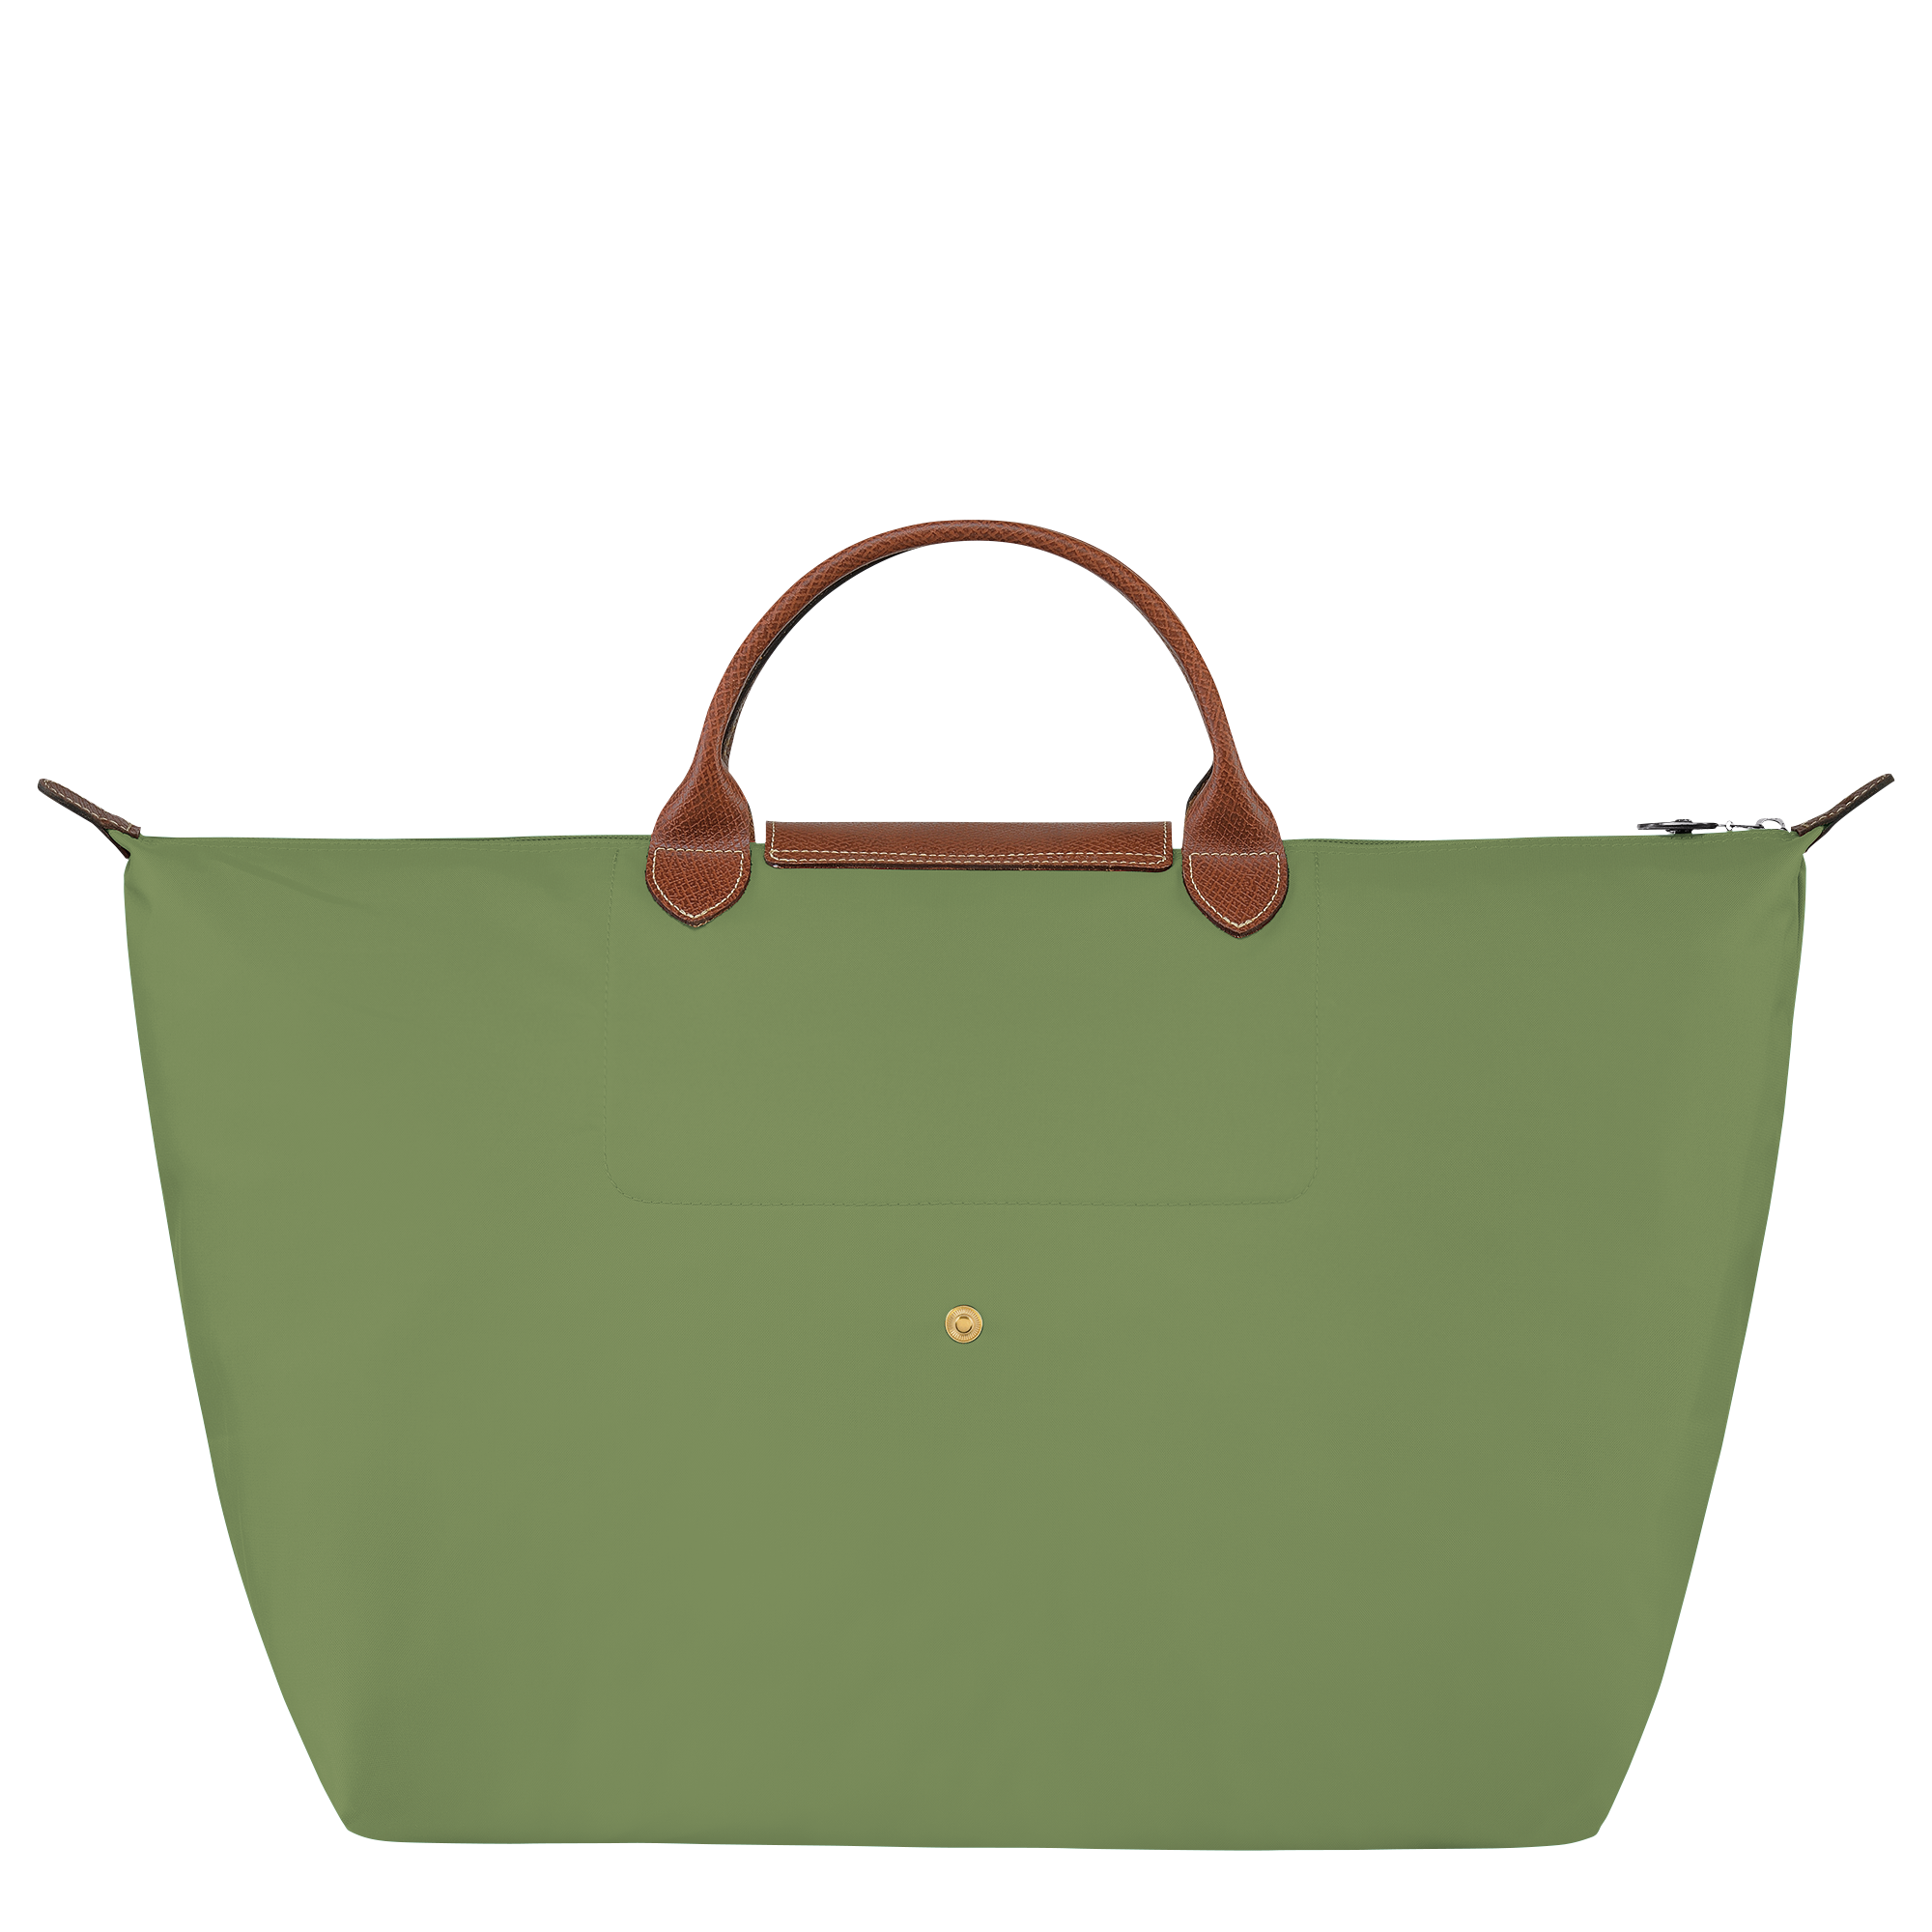 Le Pliage Original 旅行袋 S, 苔蘚綠色